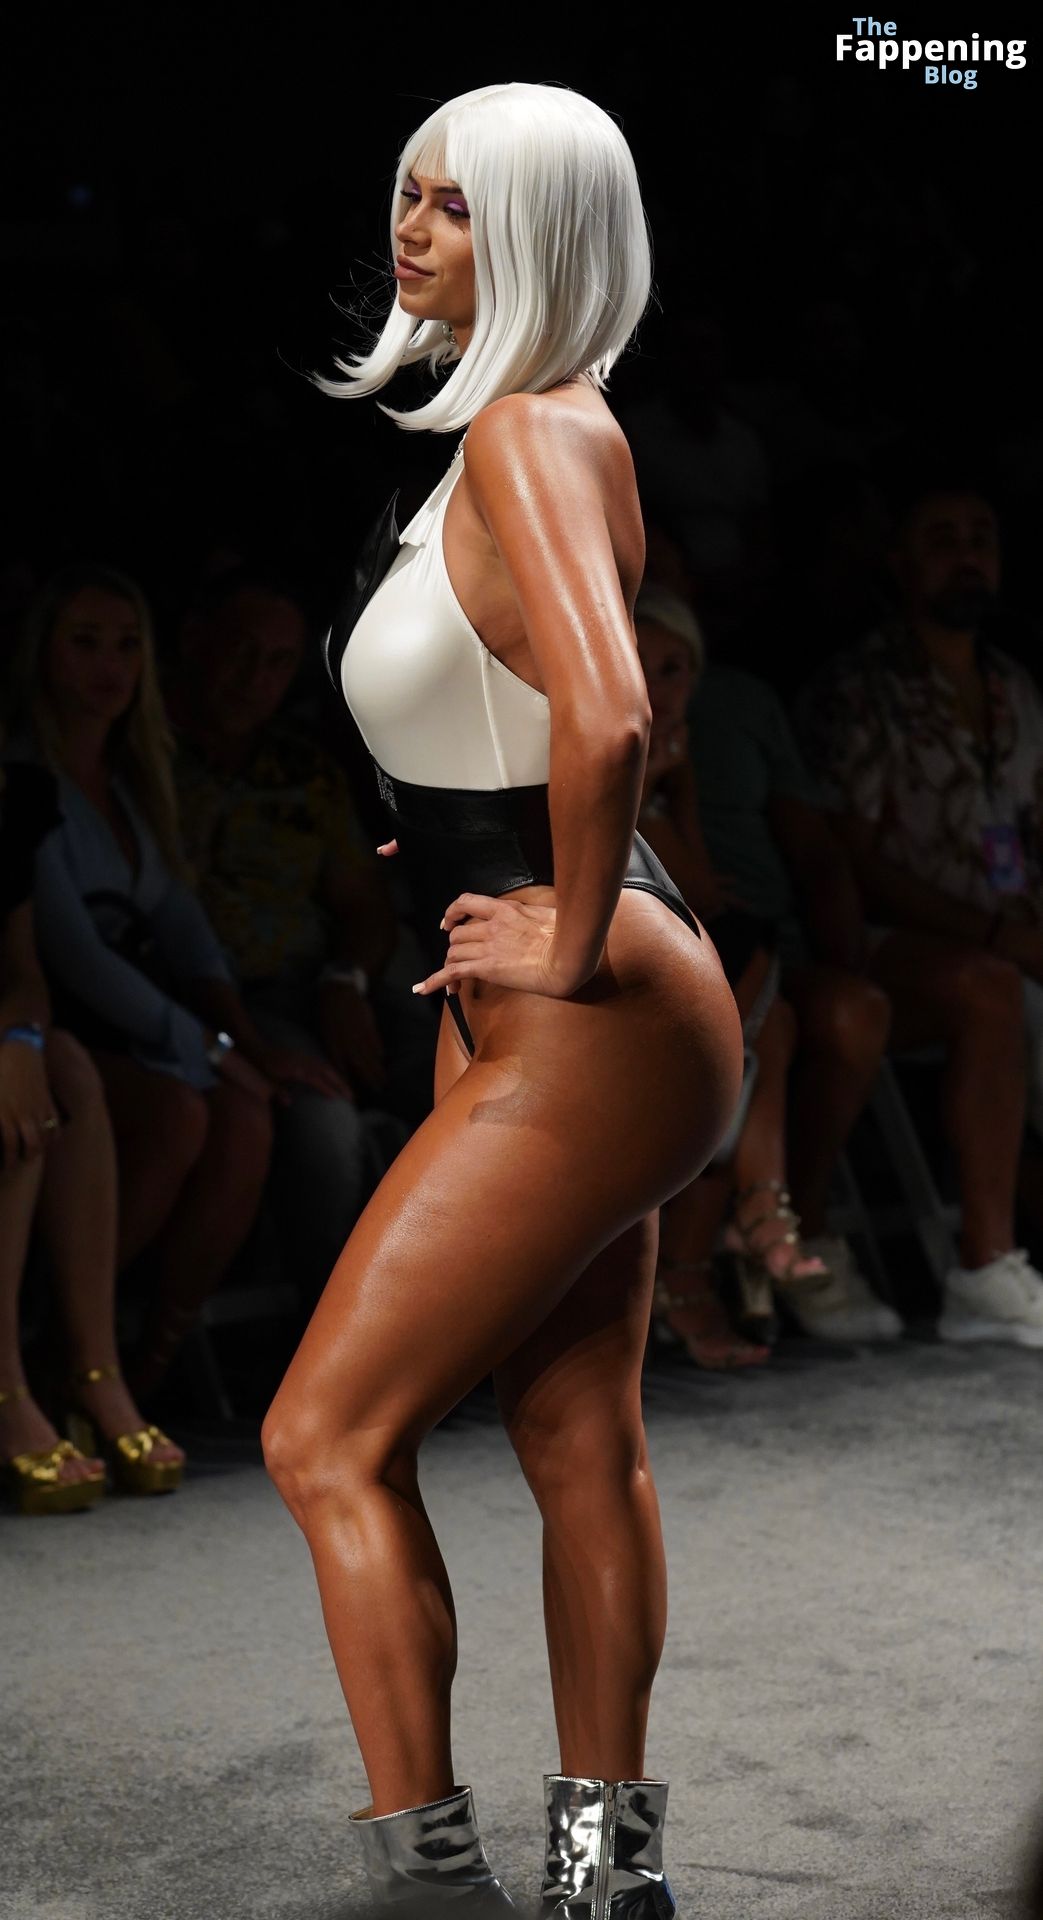 Lucciana Beynon Shows Off Her Sexy Body as She Walks Swim Week in Miami (12 Photos)